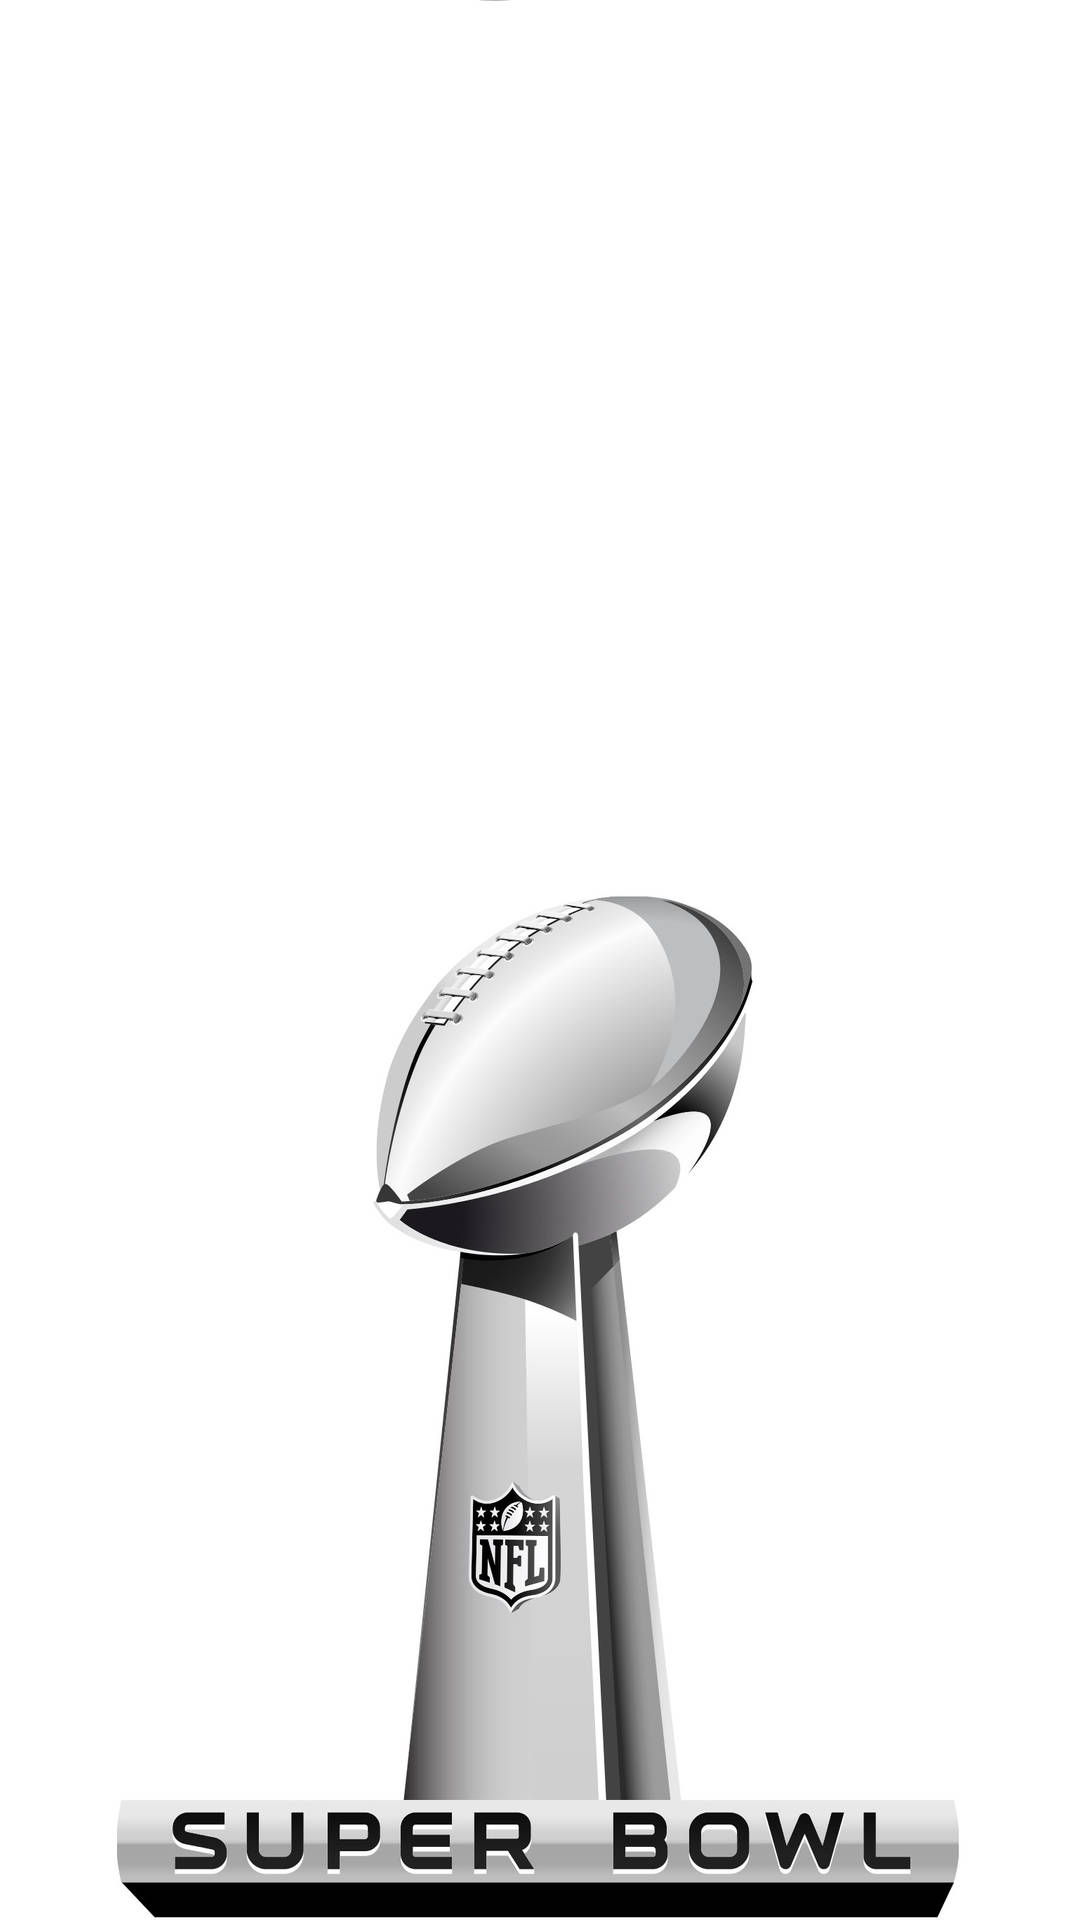 Super Bowl Vince Lombardi Trophy Background